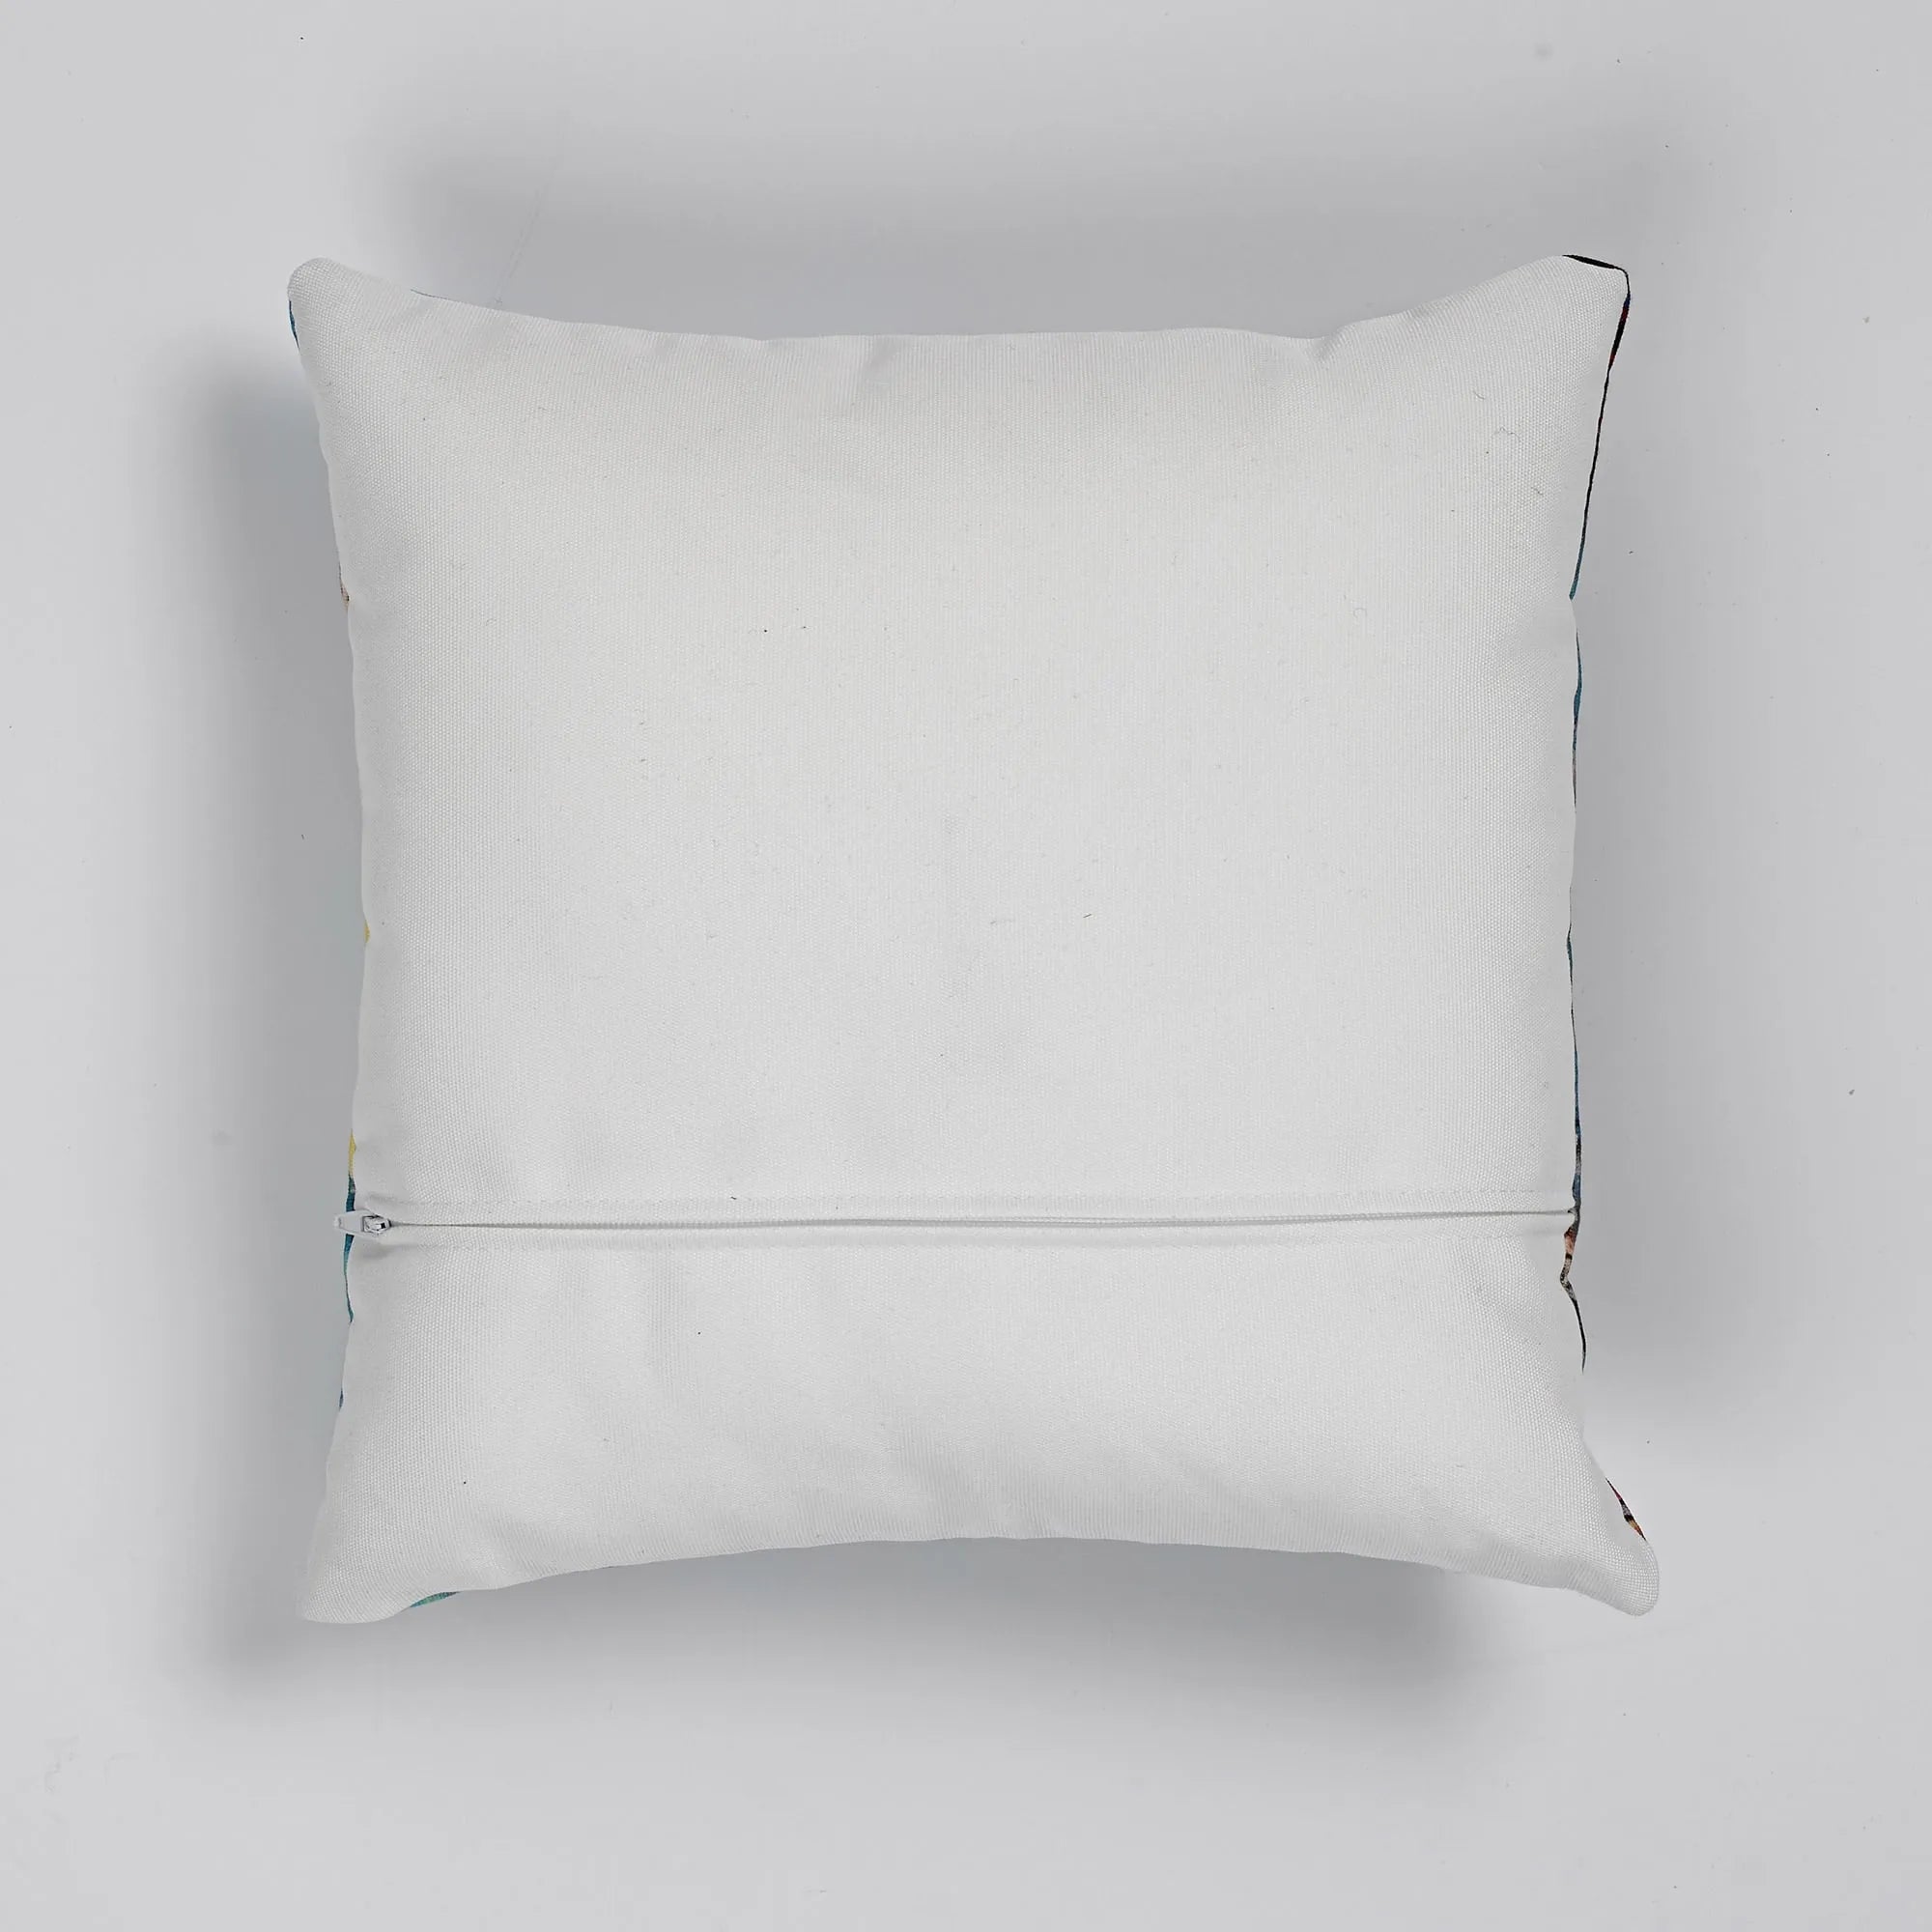 Birds - William Morris Cushion - Decorative Throw Pillow - Throw Pillows - Aesthetic Art